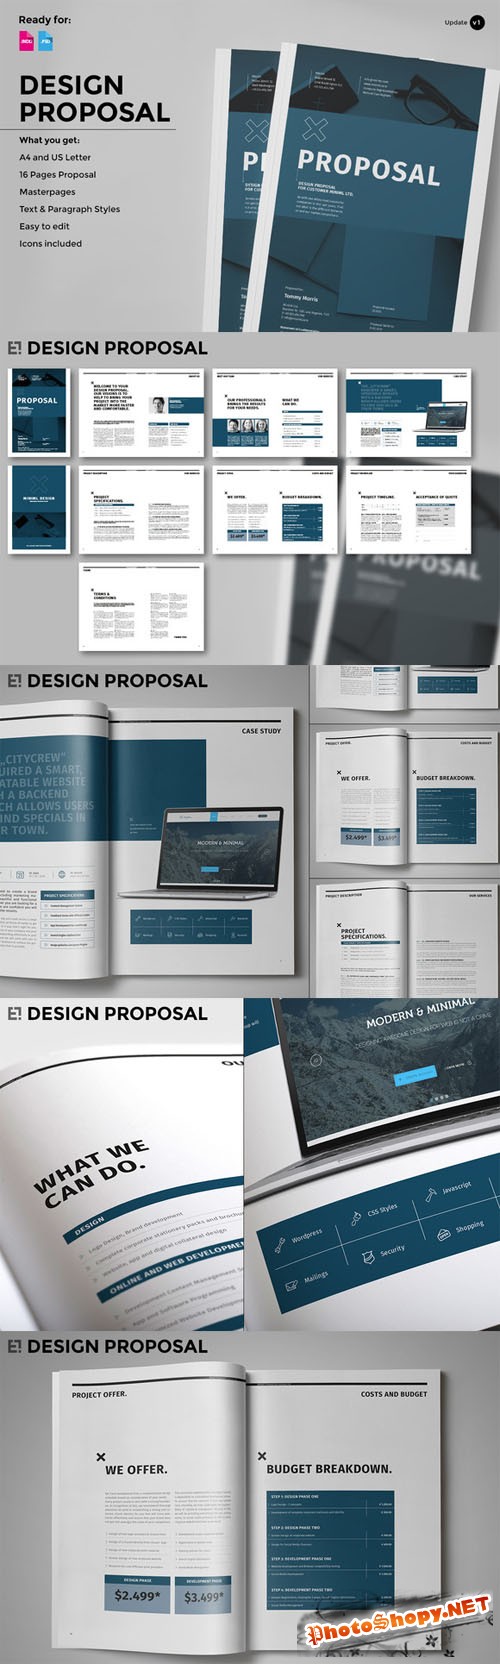 Design Proposal